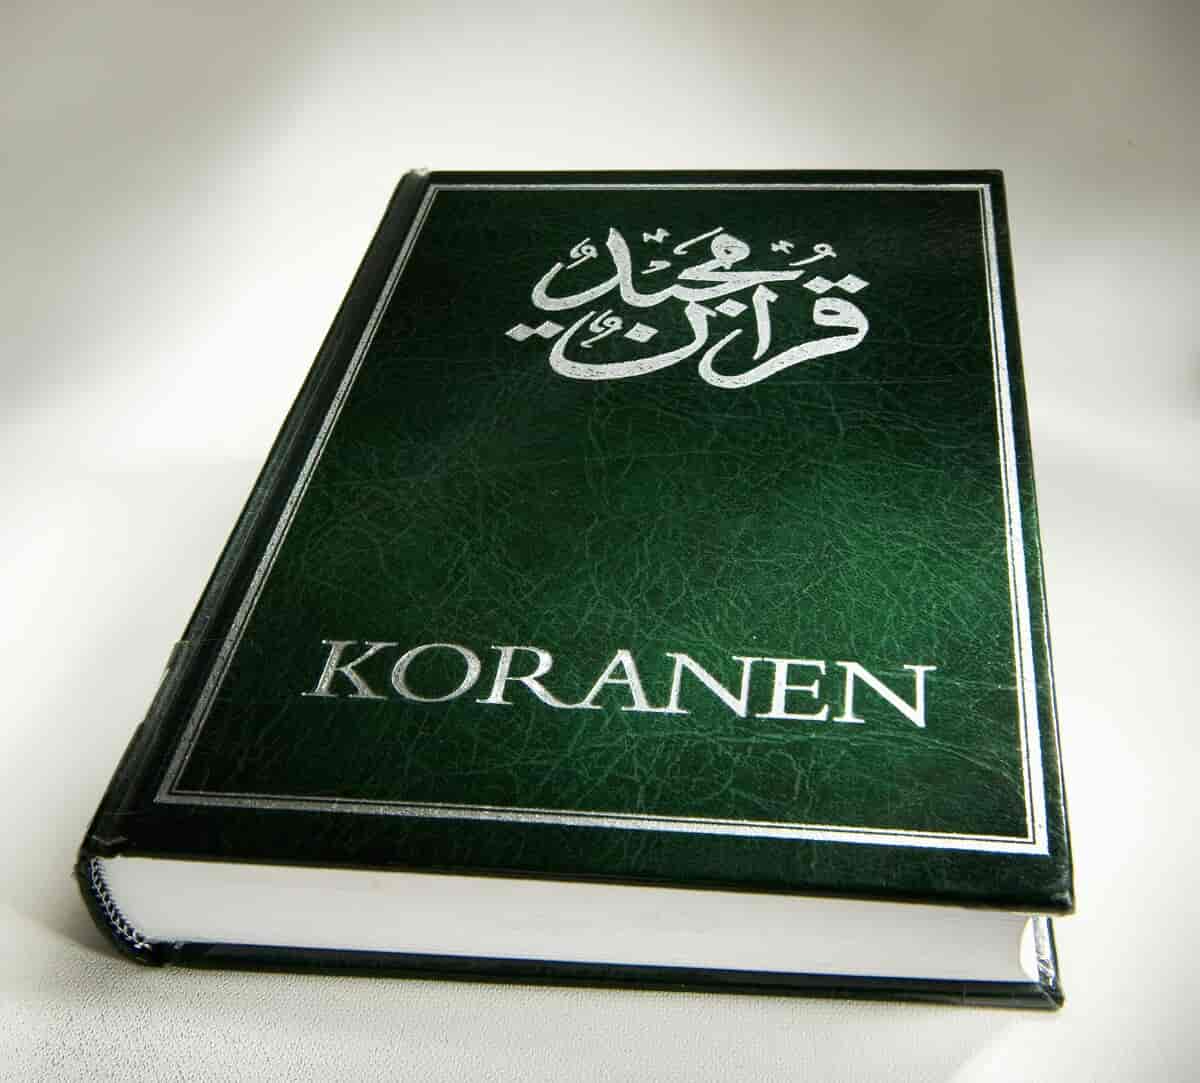 Koranen på norsk